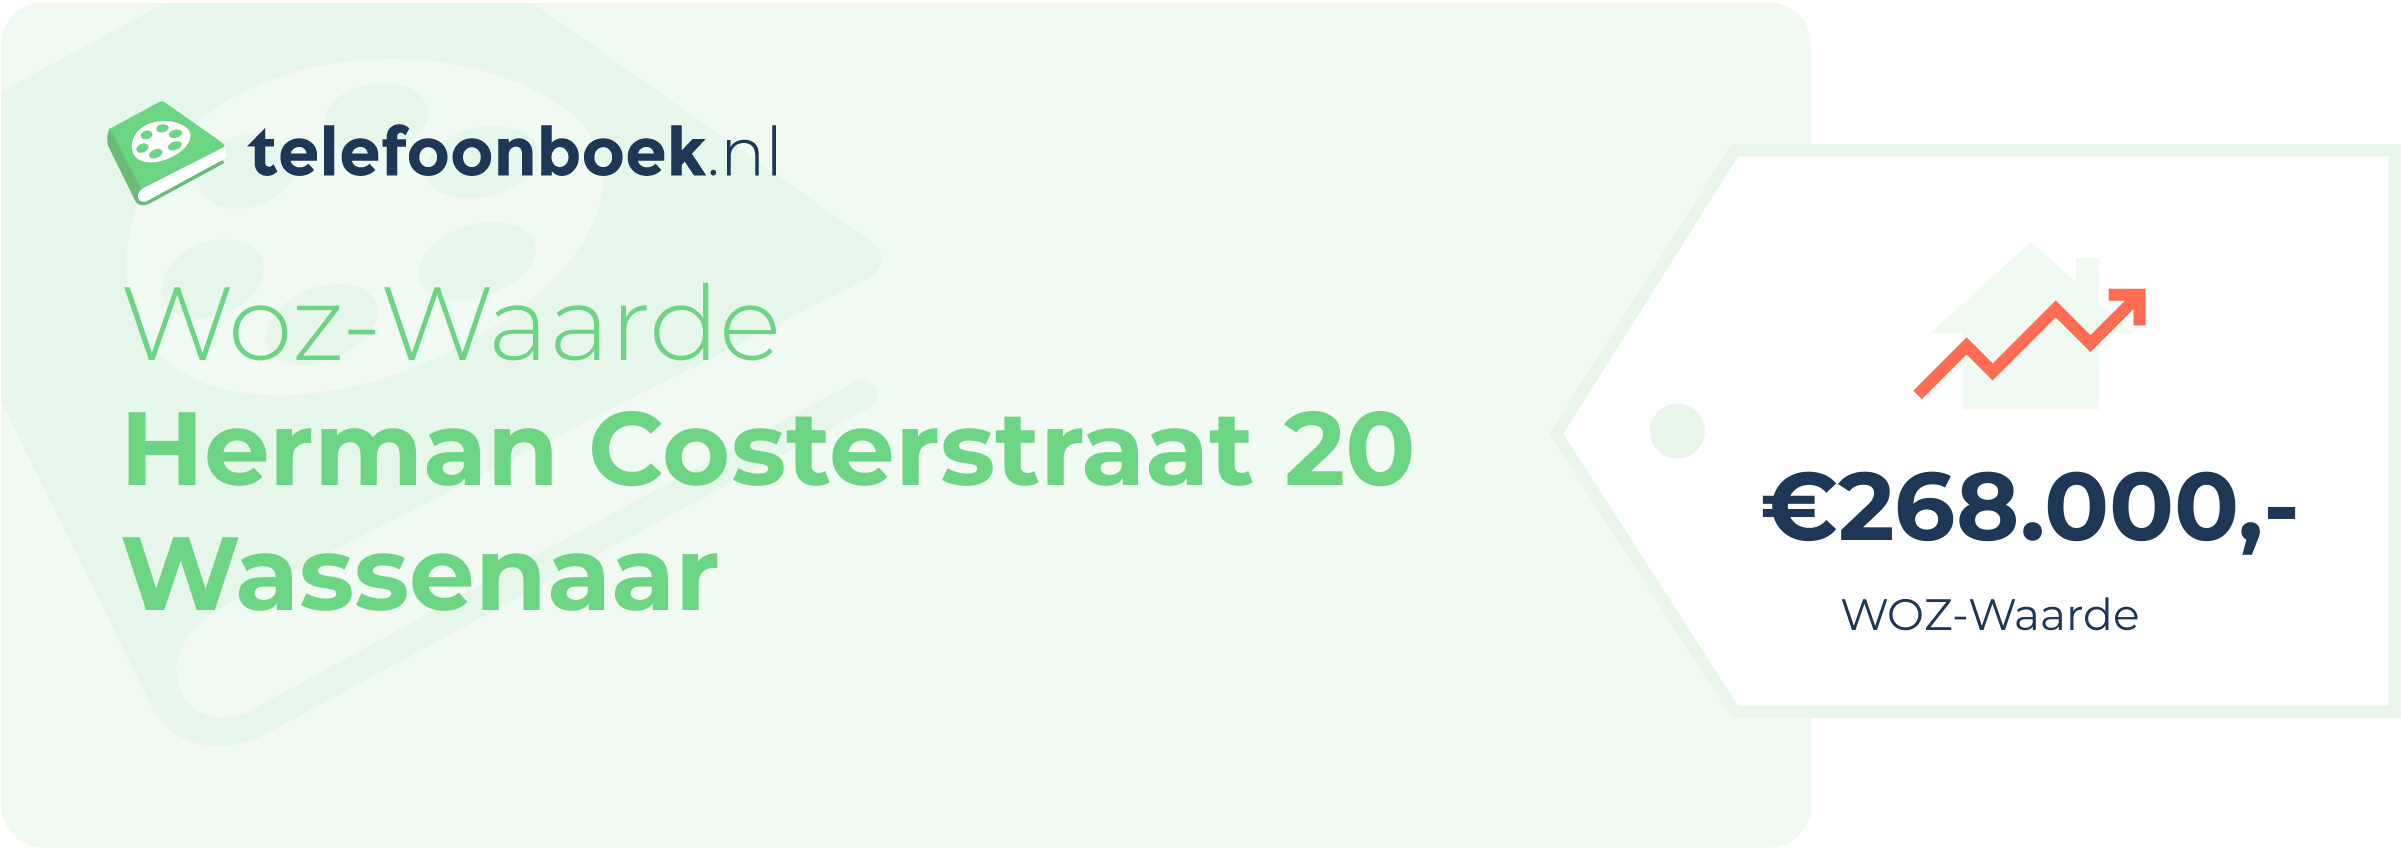 WOZ-waarde Herman Costerstraat 20 Wassenaar